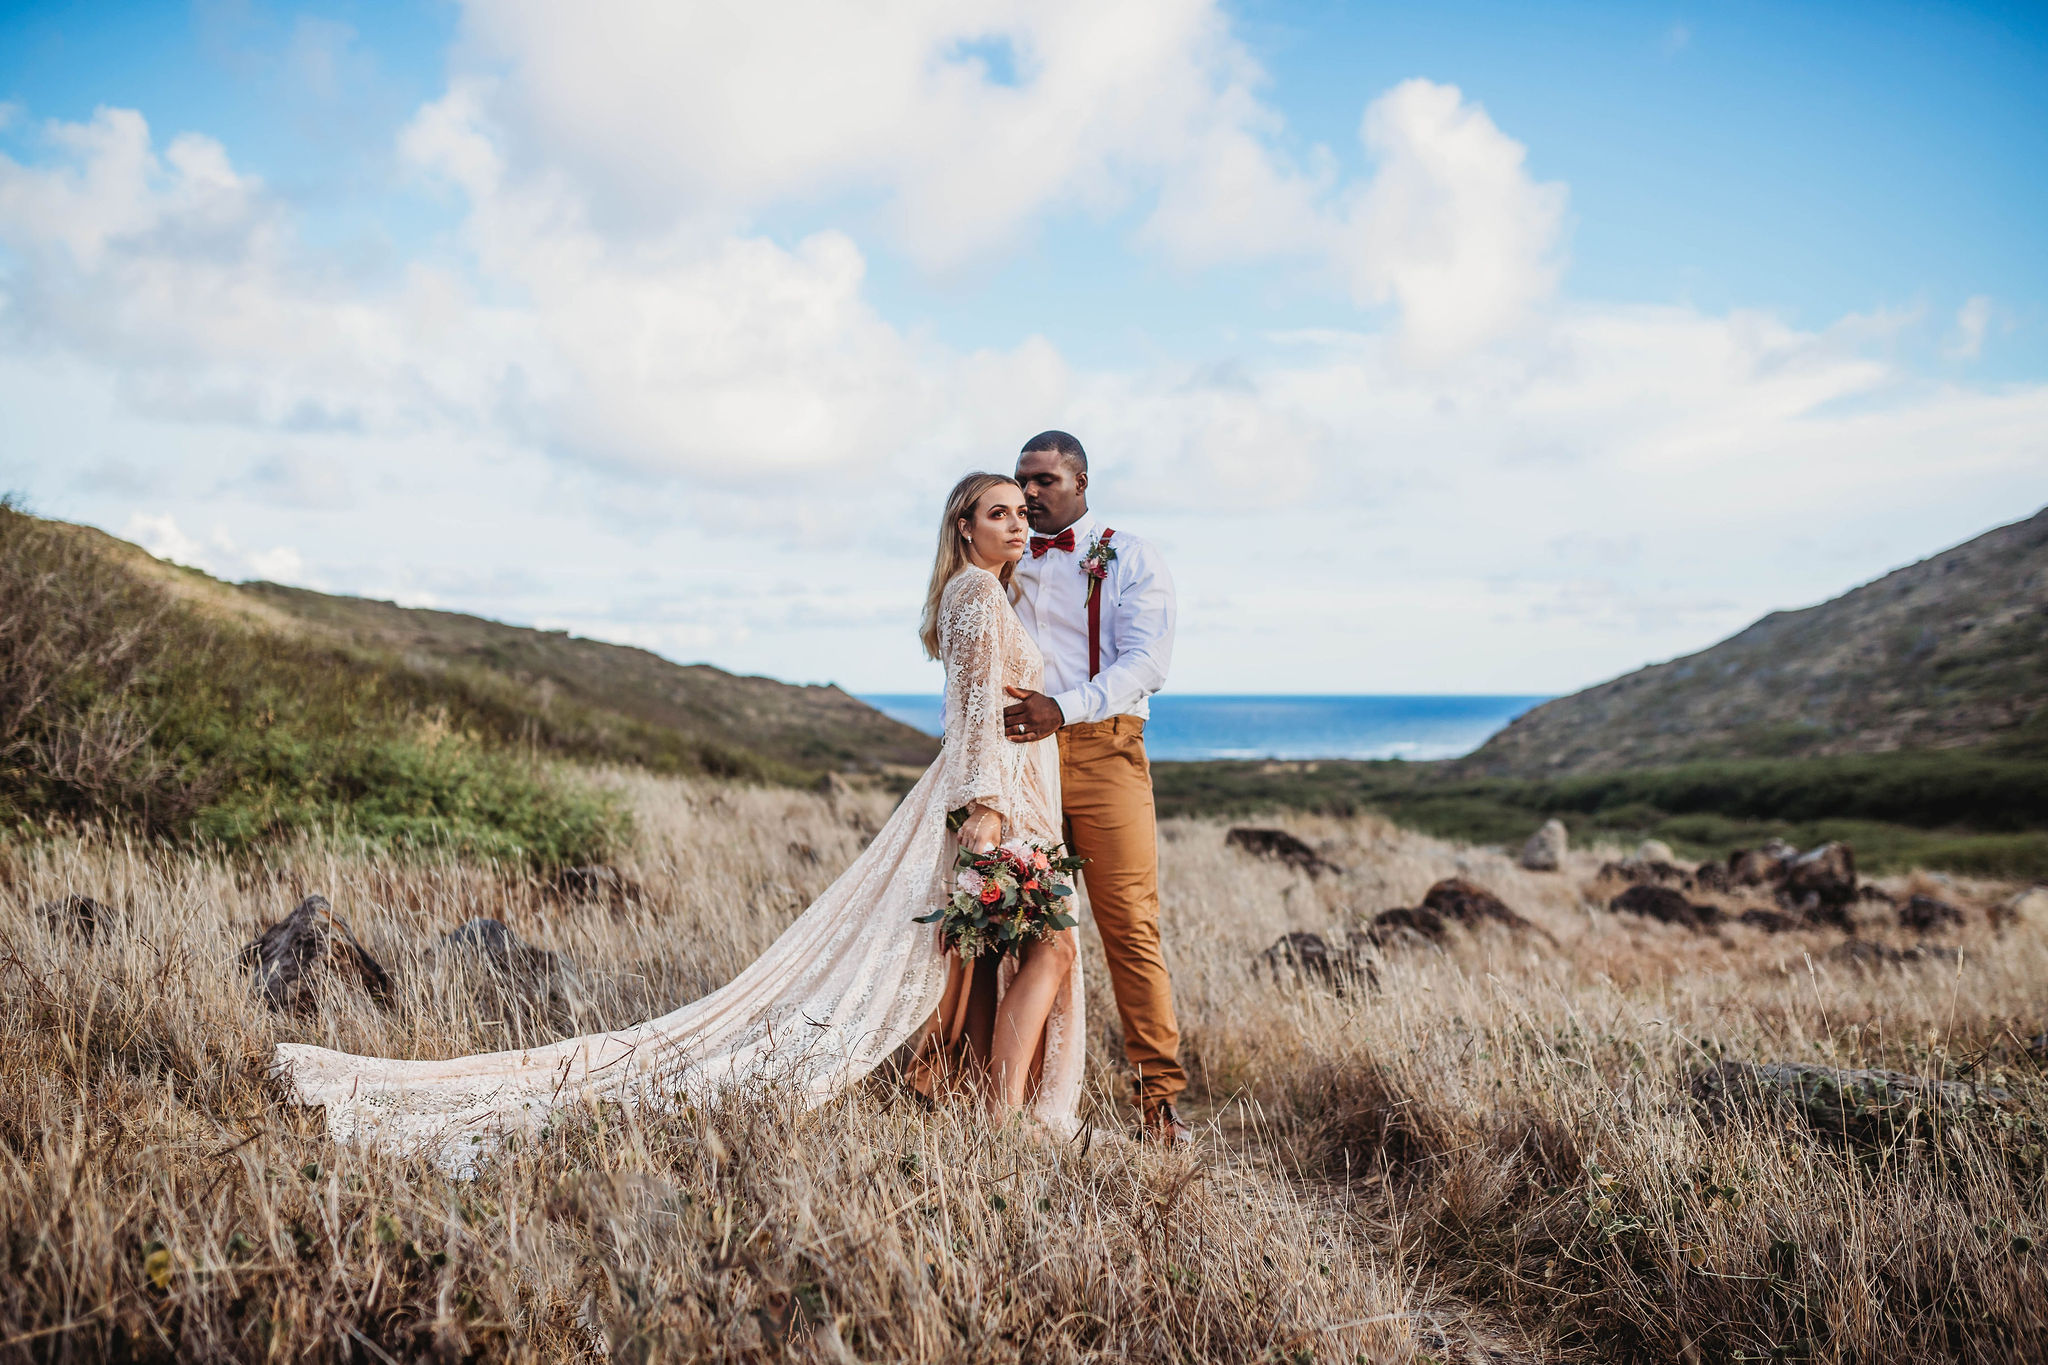 Wedding & Elopement Photographer, groom embraces bride on a dry grassy meadow near ocean